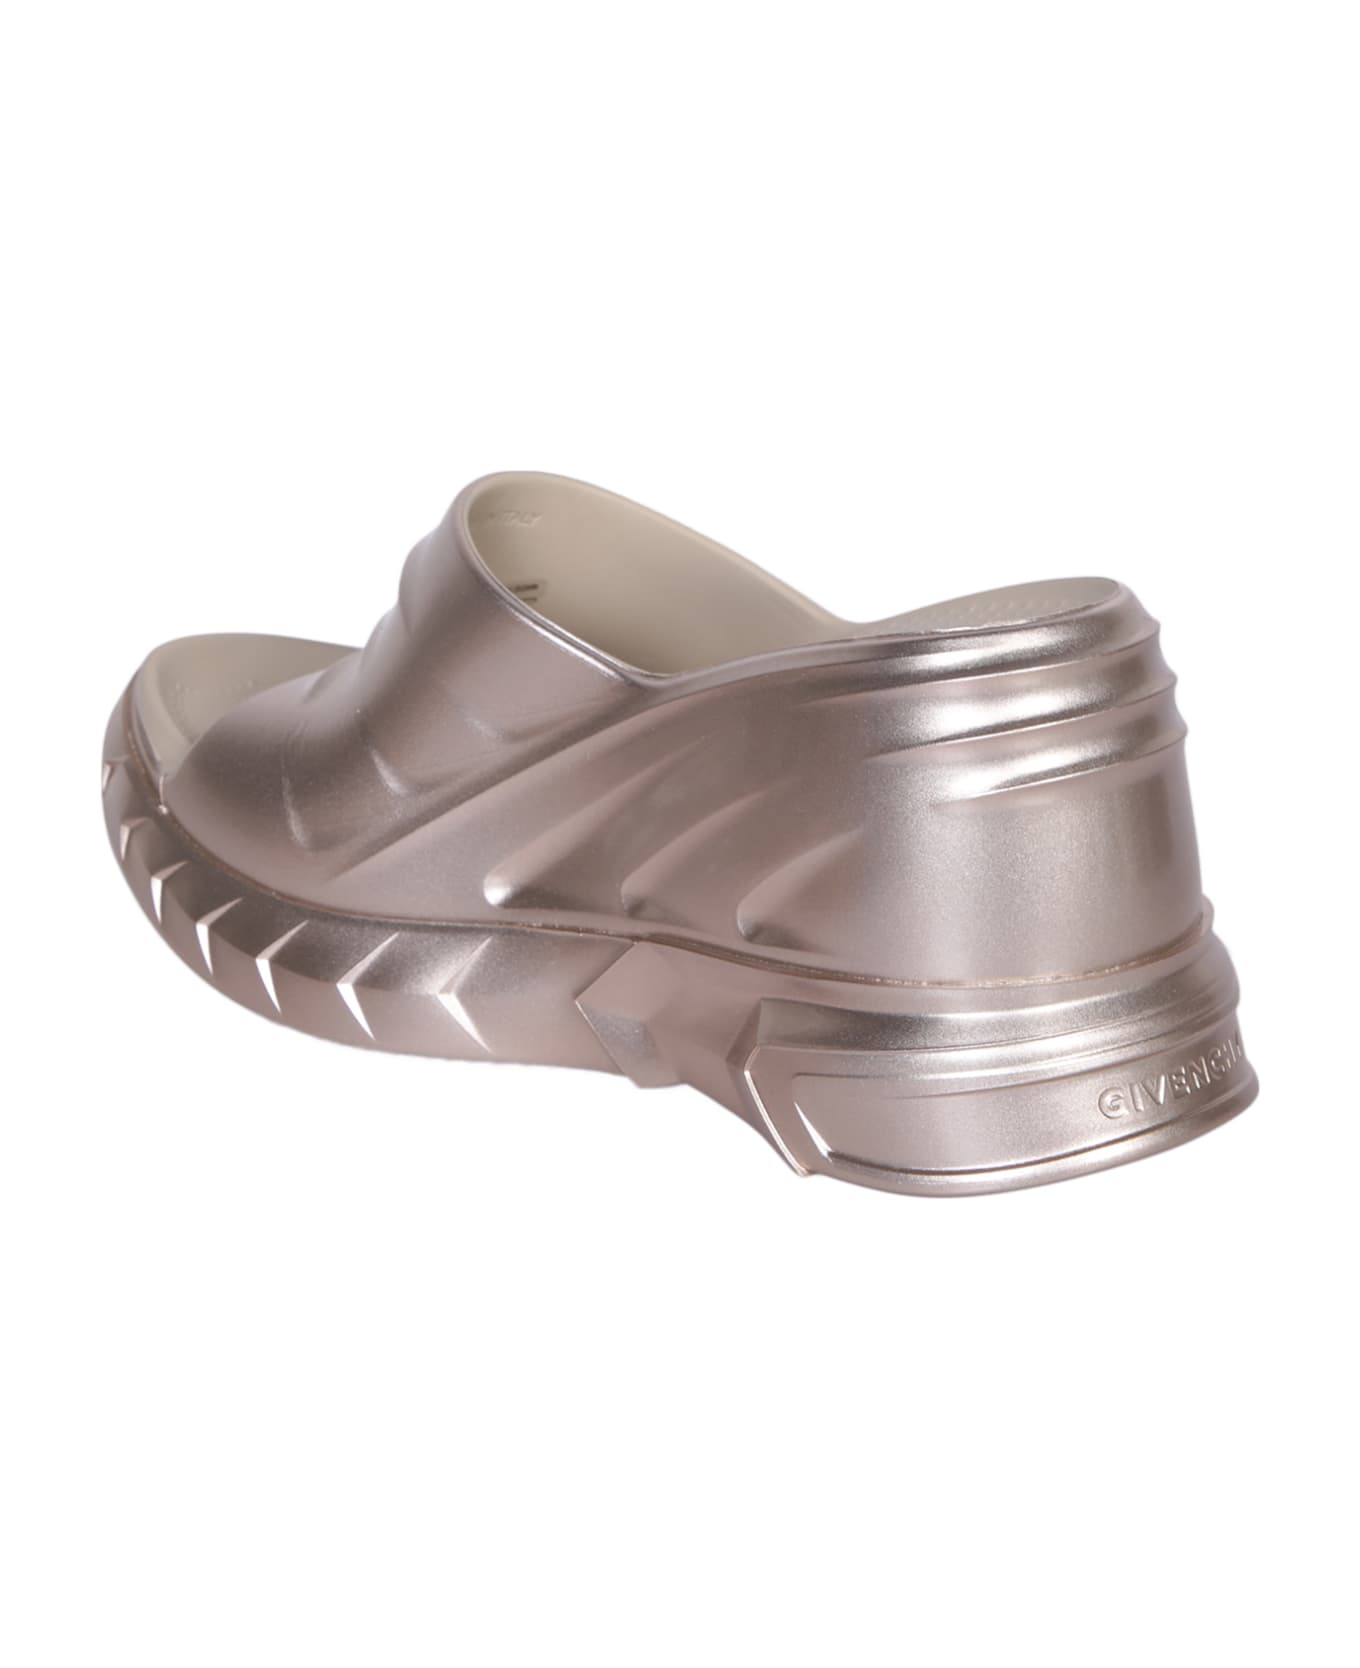 Givenchy Marshmallow Wedge Sandals - Metallic サンダル